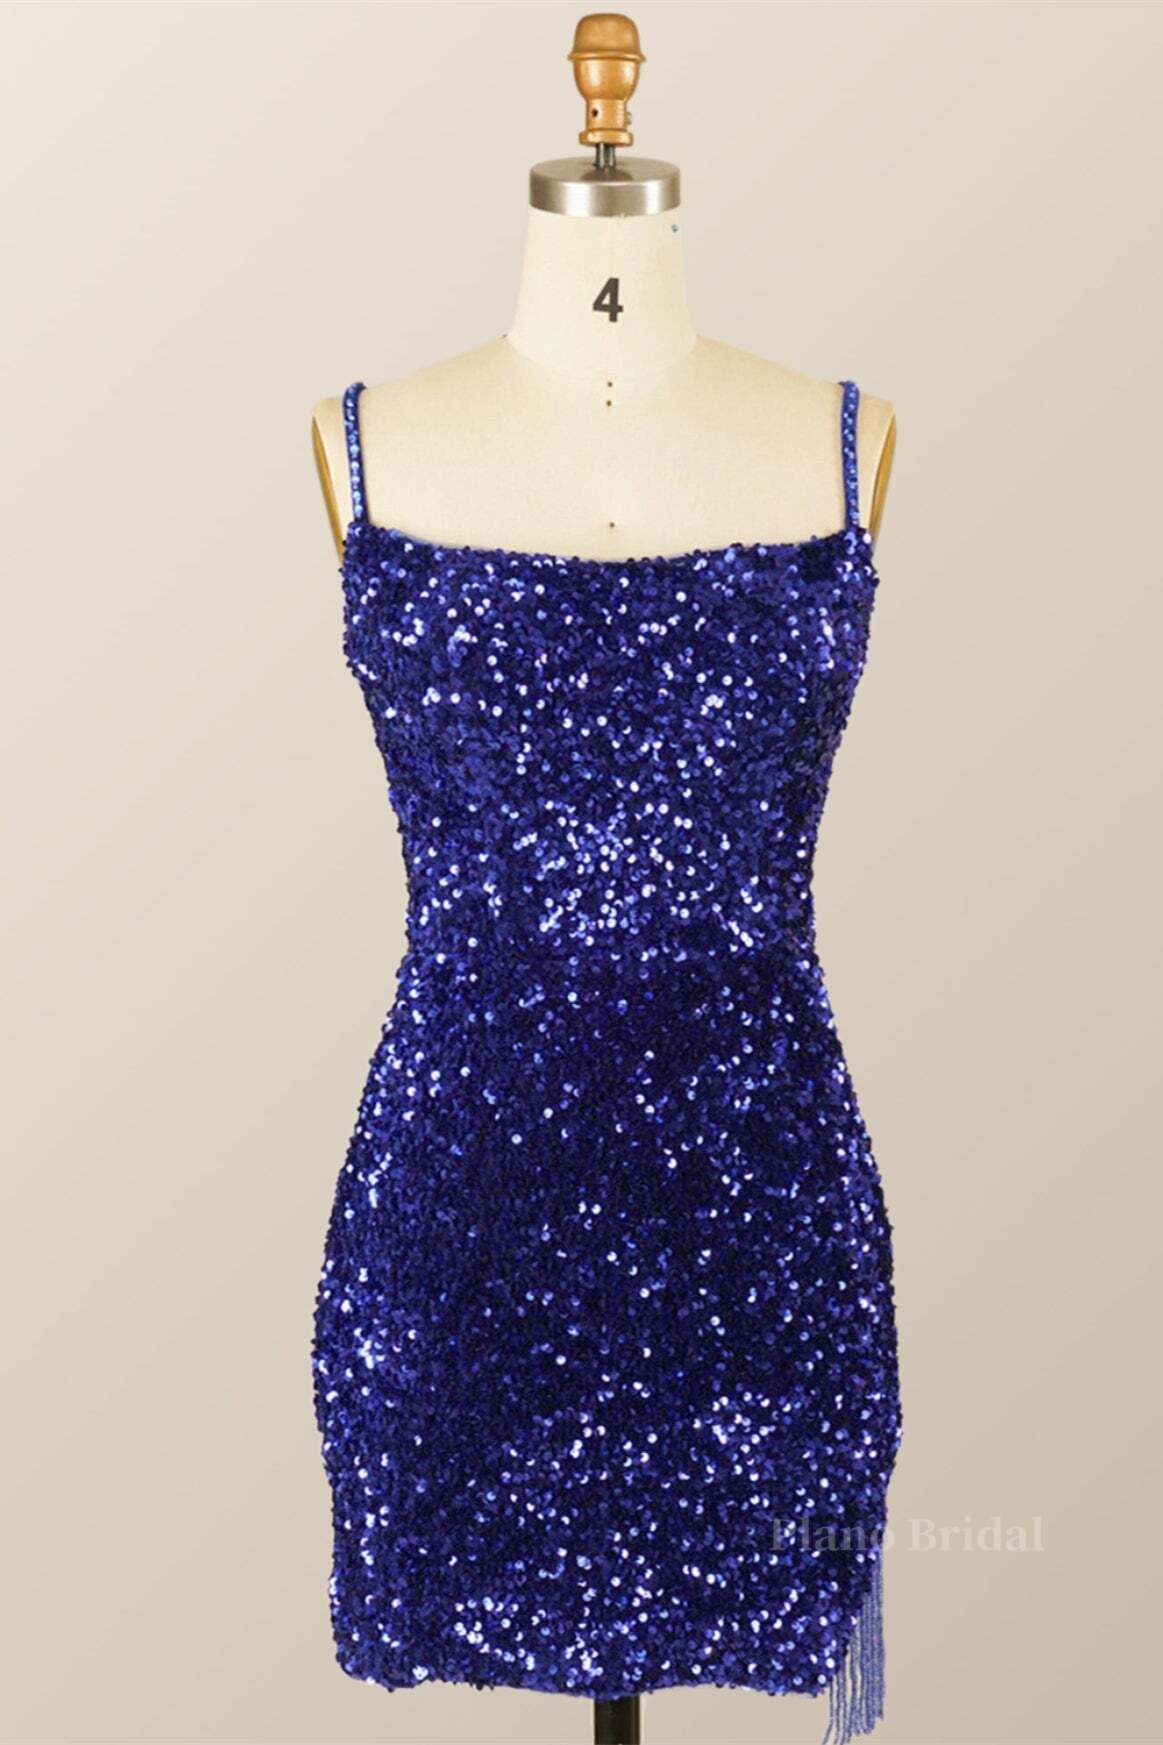 Royal Blue Sequin Tassels Bodycon Mini Dress